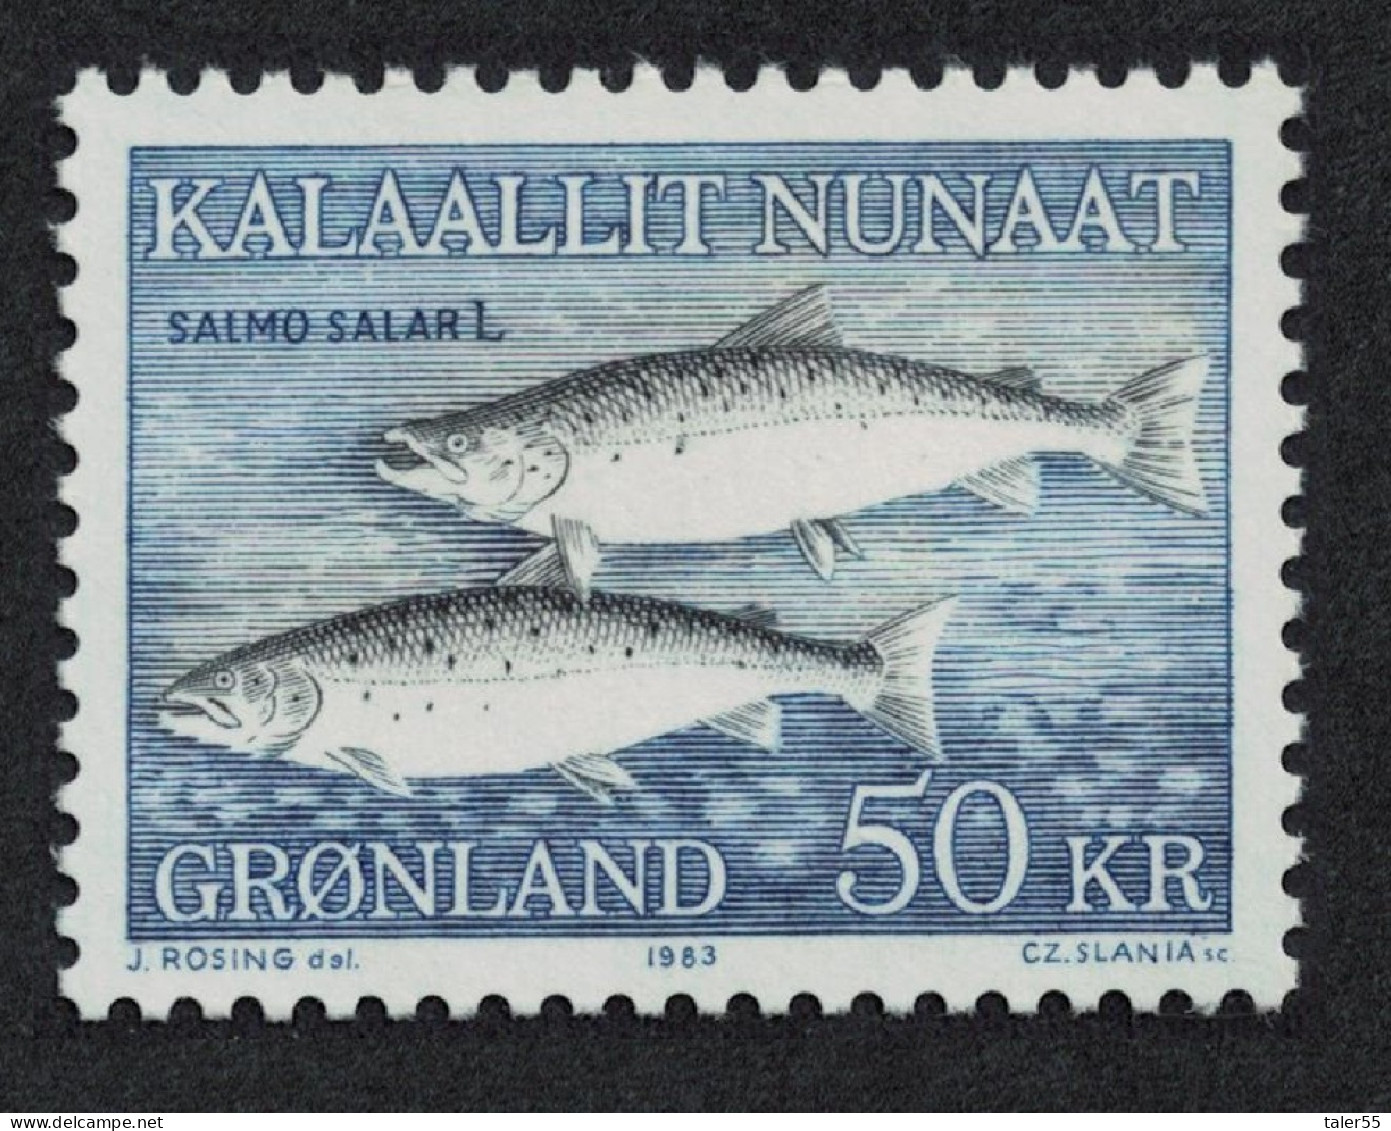 Greenland Atlantic Salmon Fish 50Kr 1983 MNH SG#138 MI#140 Sc#141 - Ungebraucht